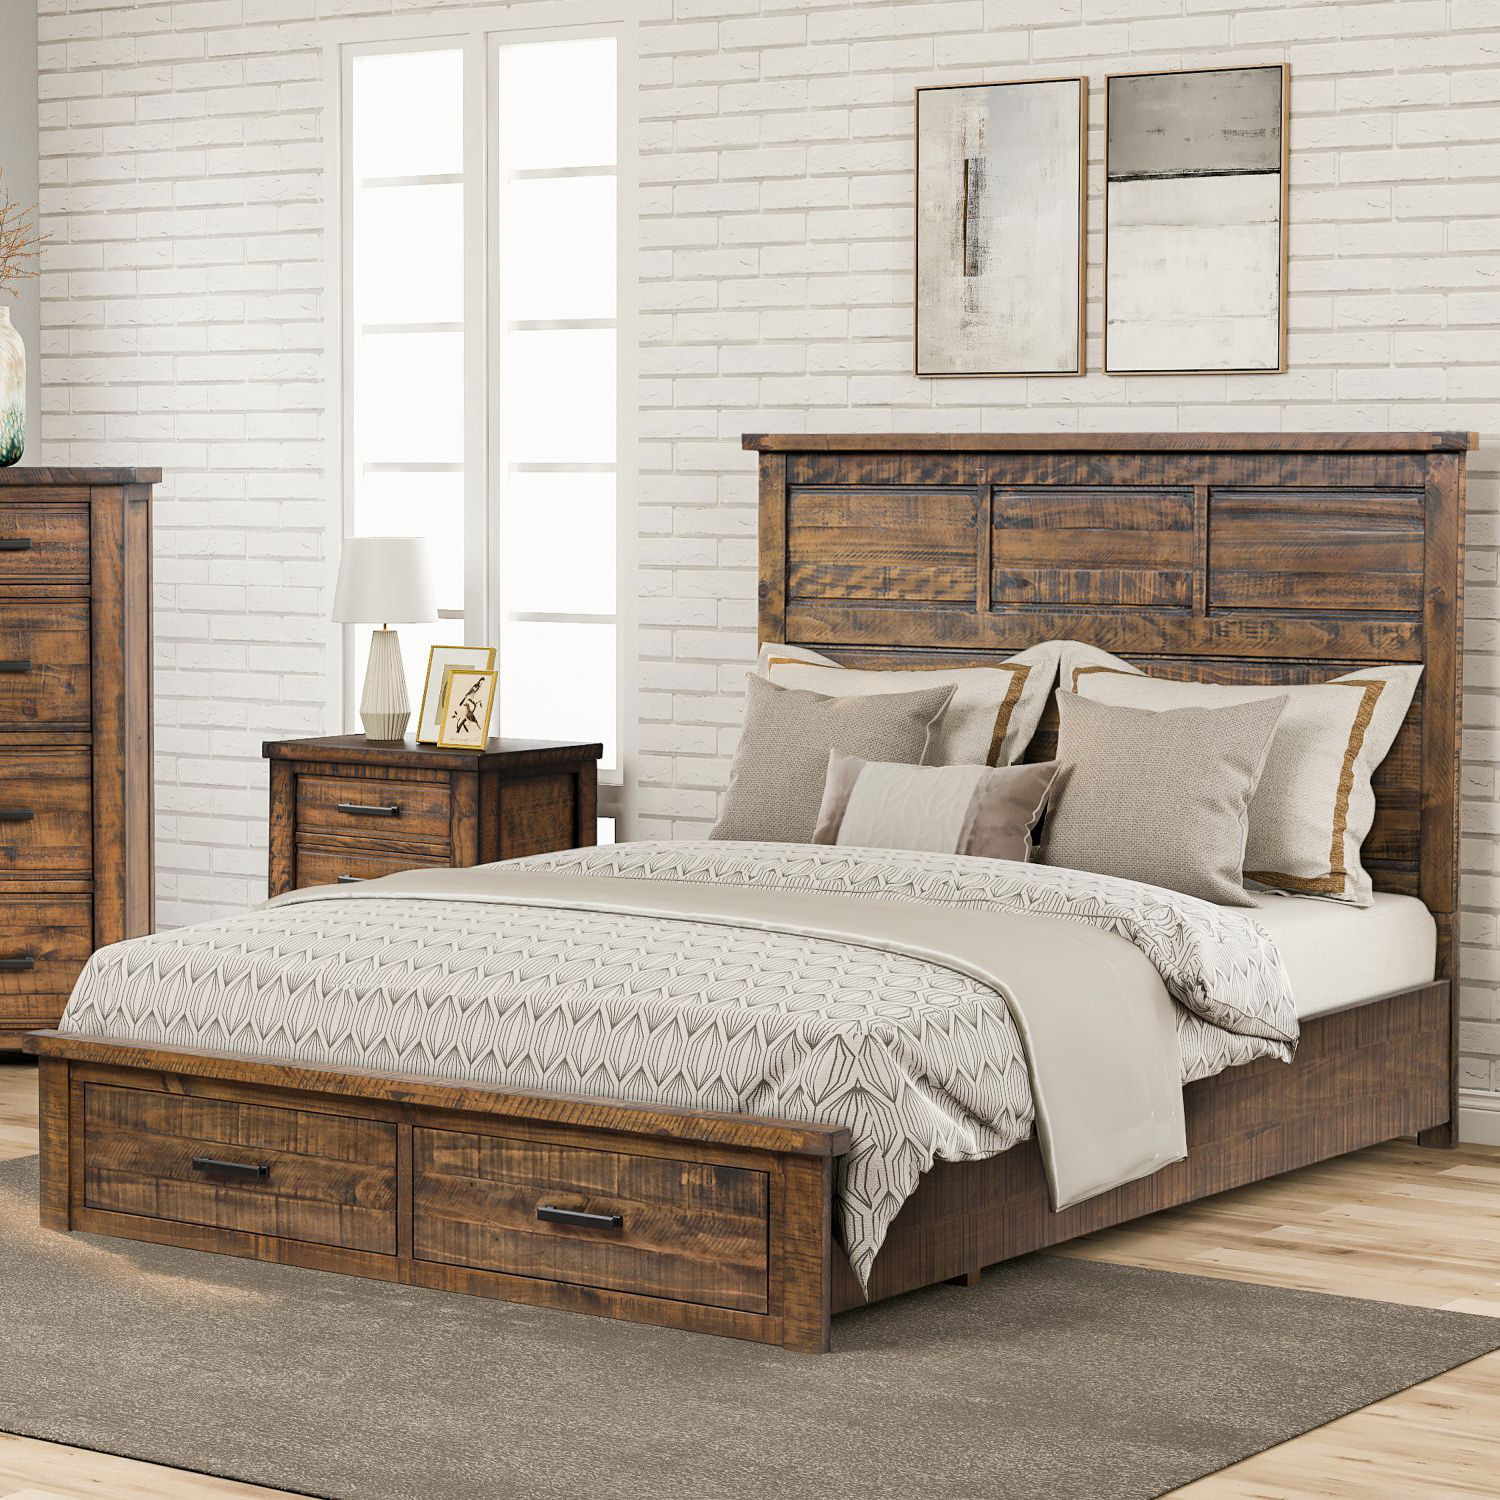 Rustic Reclaimed Pine Wood Queen Size, All Wood Queen Platform Bed Frame